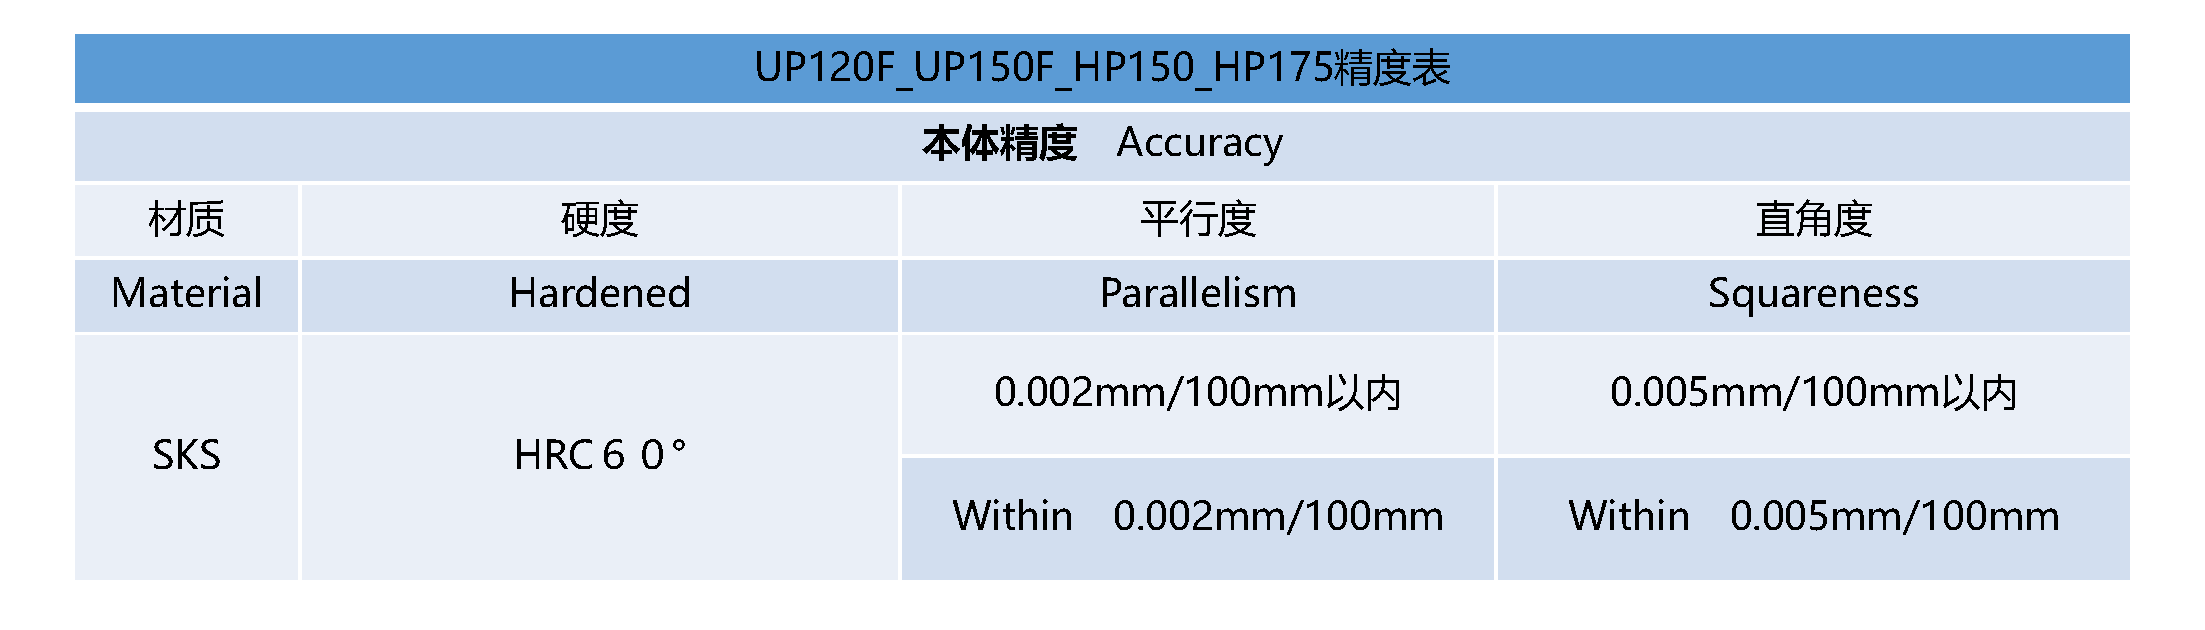 UP120F_UP150F_HP150_HP175_精度表 - 中文.png